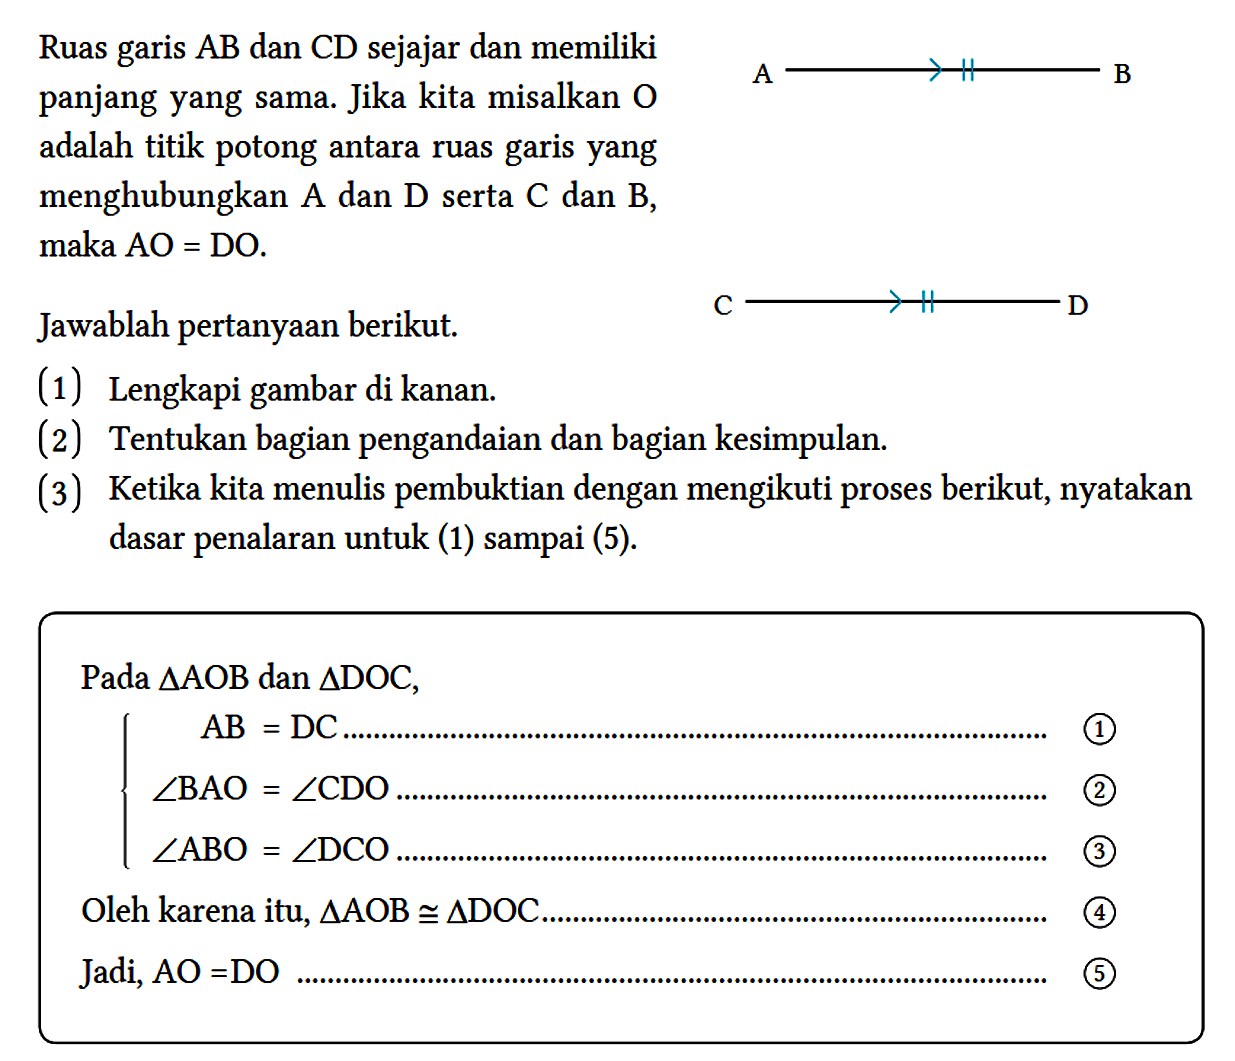 Ruas garis AB dan CD sejajar dan memiliki panjang yang sama. Jika kita misalkan O adalah titik potong antara ruas garis yang menghubungkan A dan D serta  C  dan  B , maka AO = DO.
A B C D 
Jawablah pertanyaan berikut.
(1) Lengkapi gambar di kanan.
(2) Tentukan bagian pengandaian dan bagian kesimpulan.
(3) Ketika kita menulis pembuktian dengan mengikuti proses berikut, nyatakan dasar penalaran untuk (1) sampai (5).
Pada  segitiga AOB dan segitiga DOC,
AB = DC ... 1
sudut BAO = sudut CDO ... 2
sudut ABO = sudut DCO ... 3
Oleh karena itu, segitiga AOB kongruen segitiga DOC ... 4 
Jadi, AO = DO ... 5